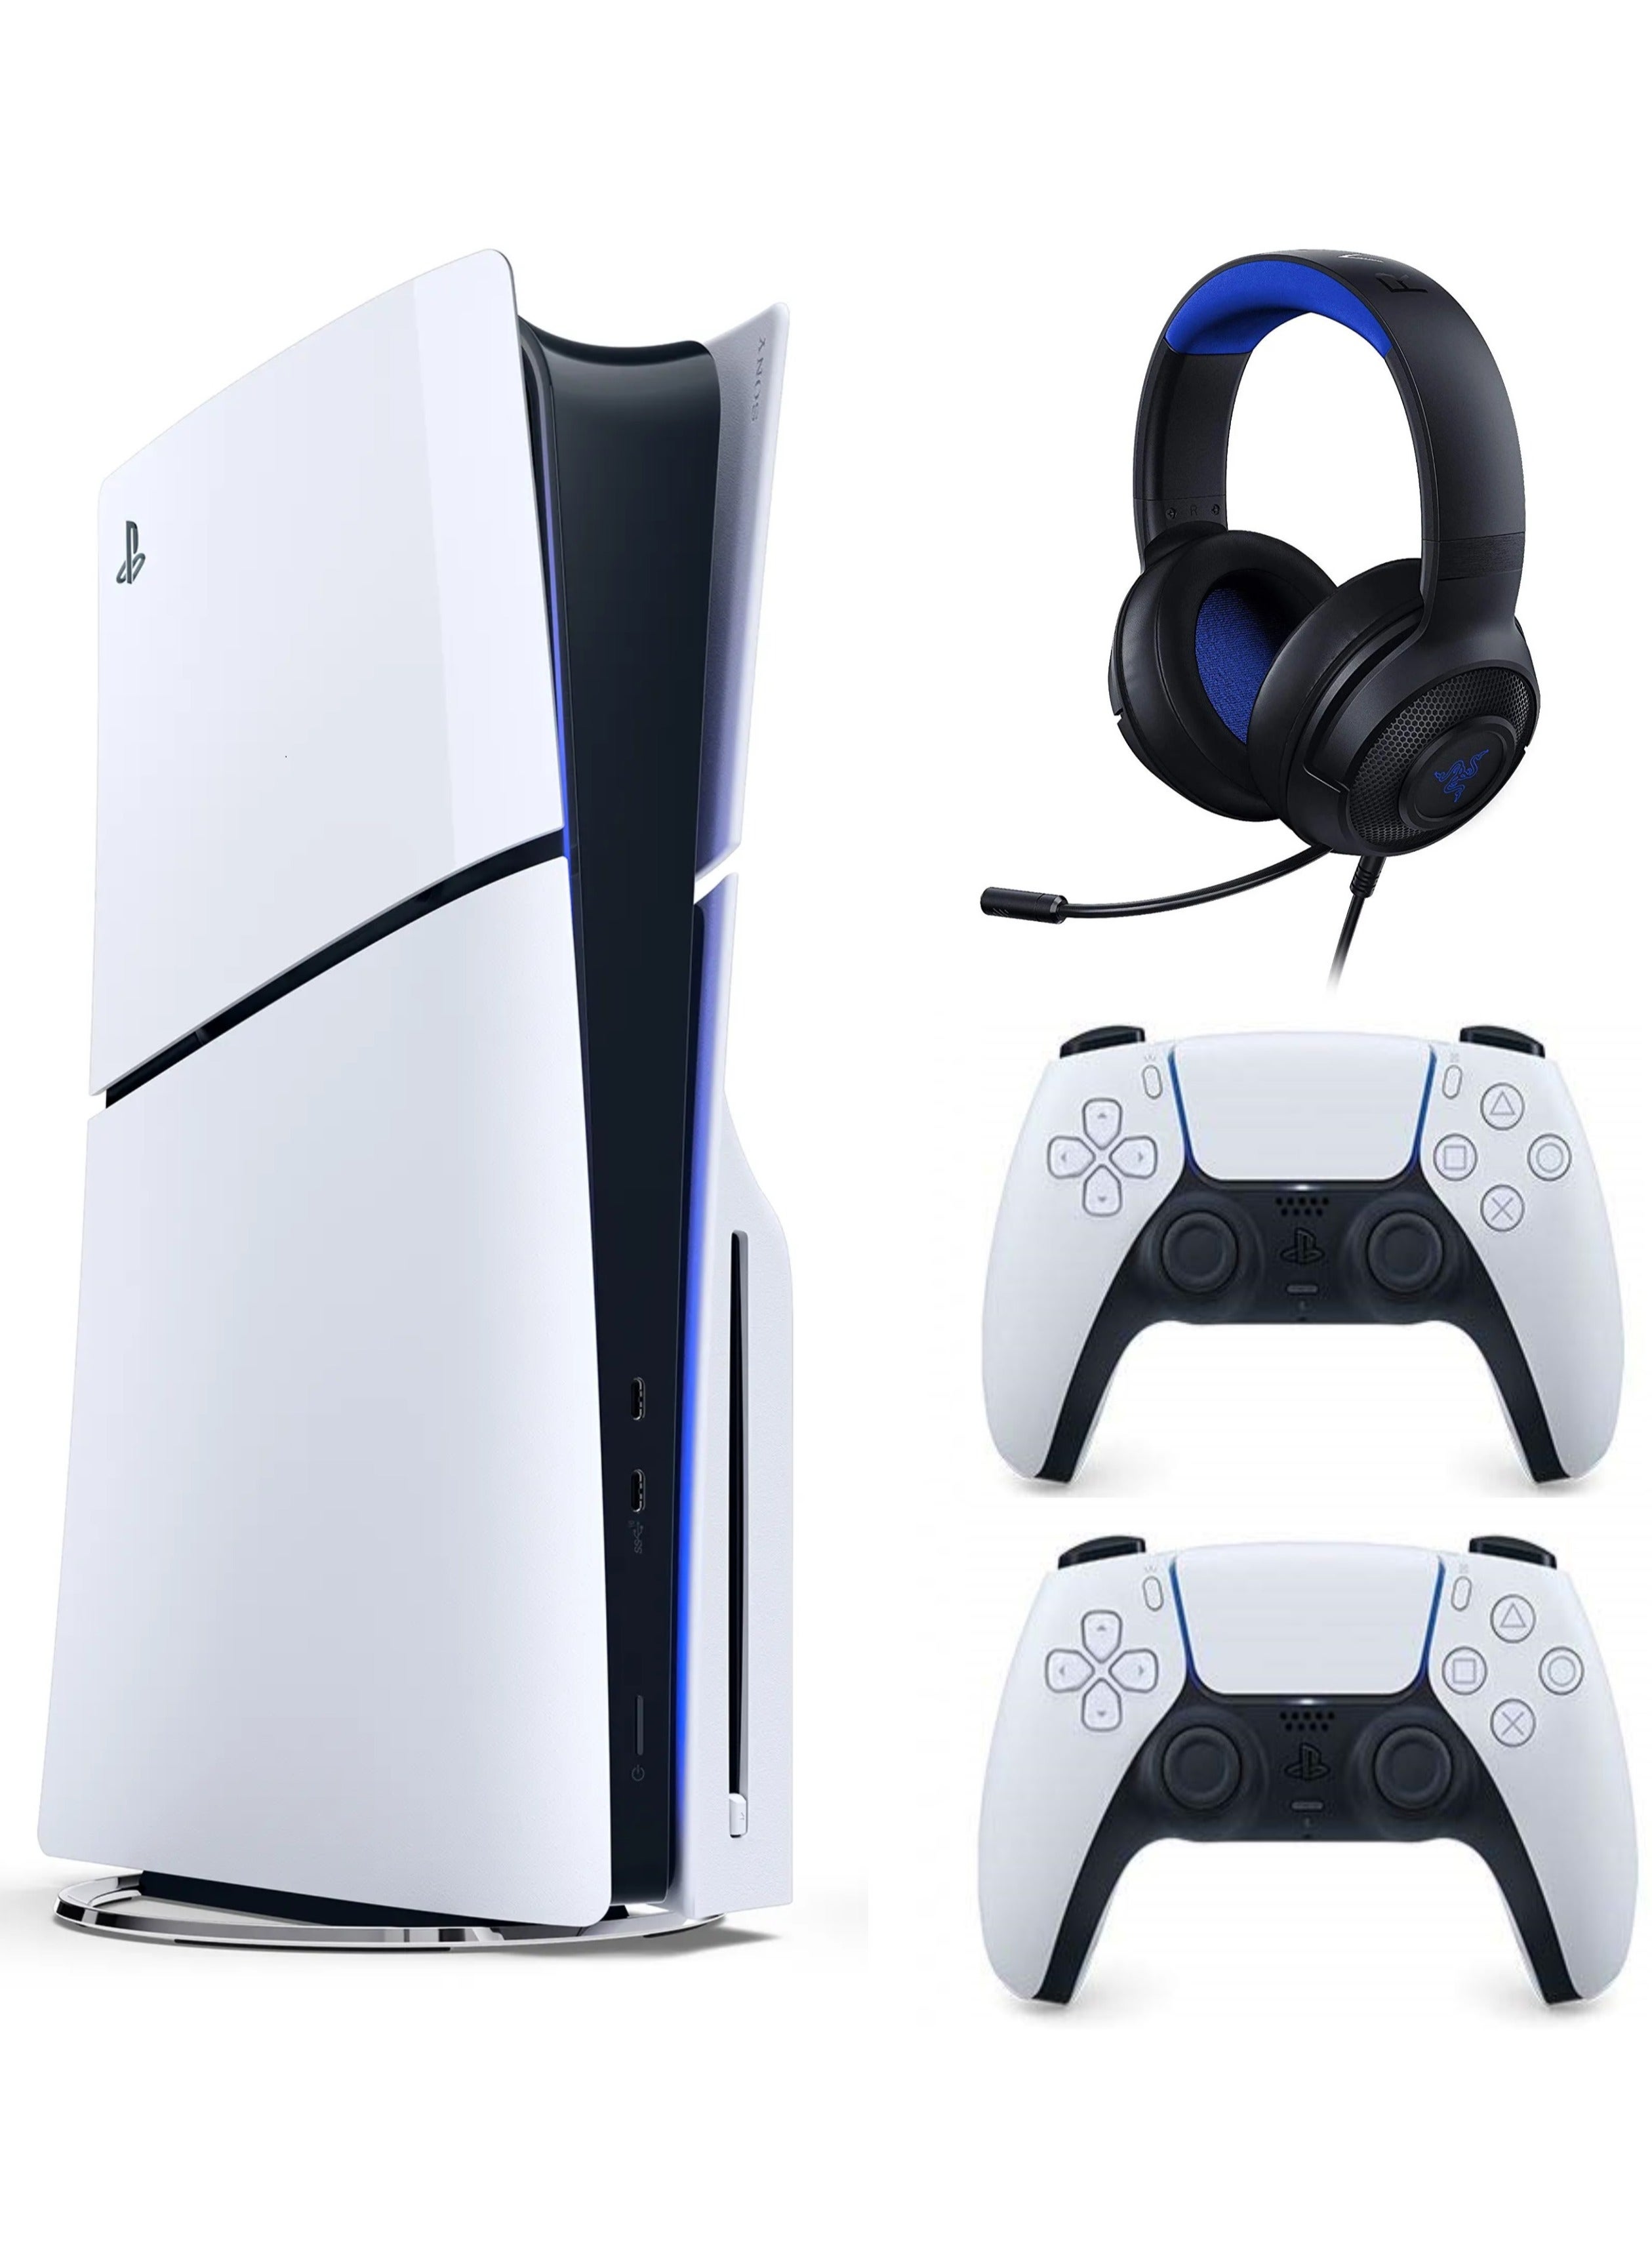 Sony PlayStation 5 PS5 price in Saudi Arabia